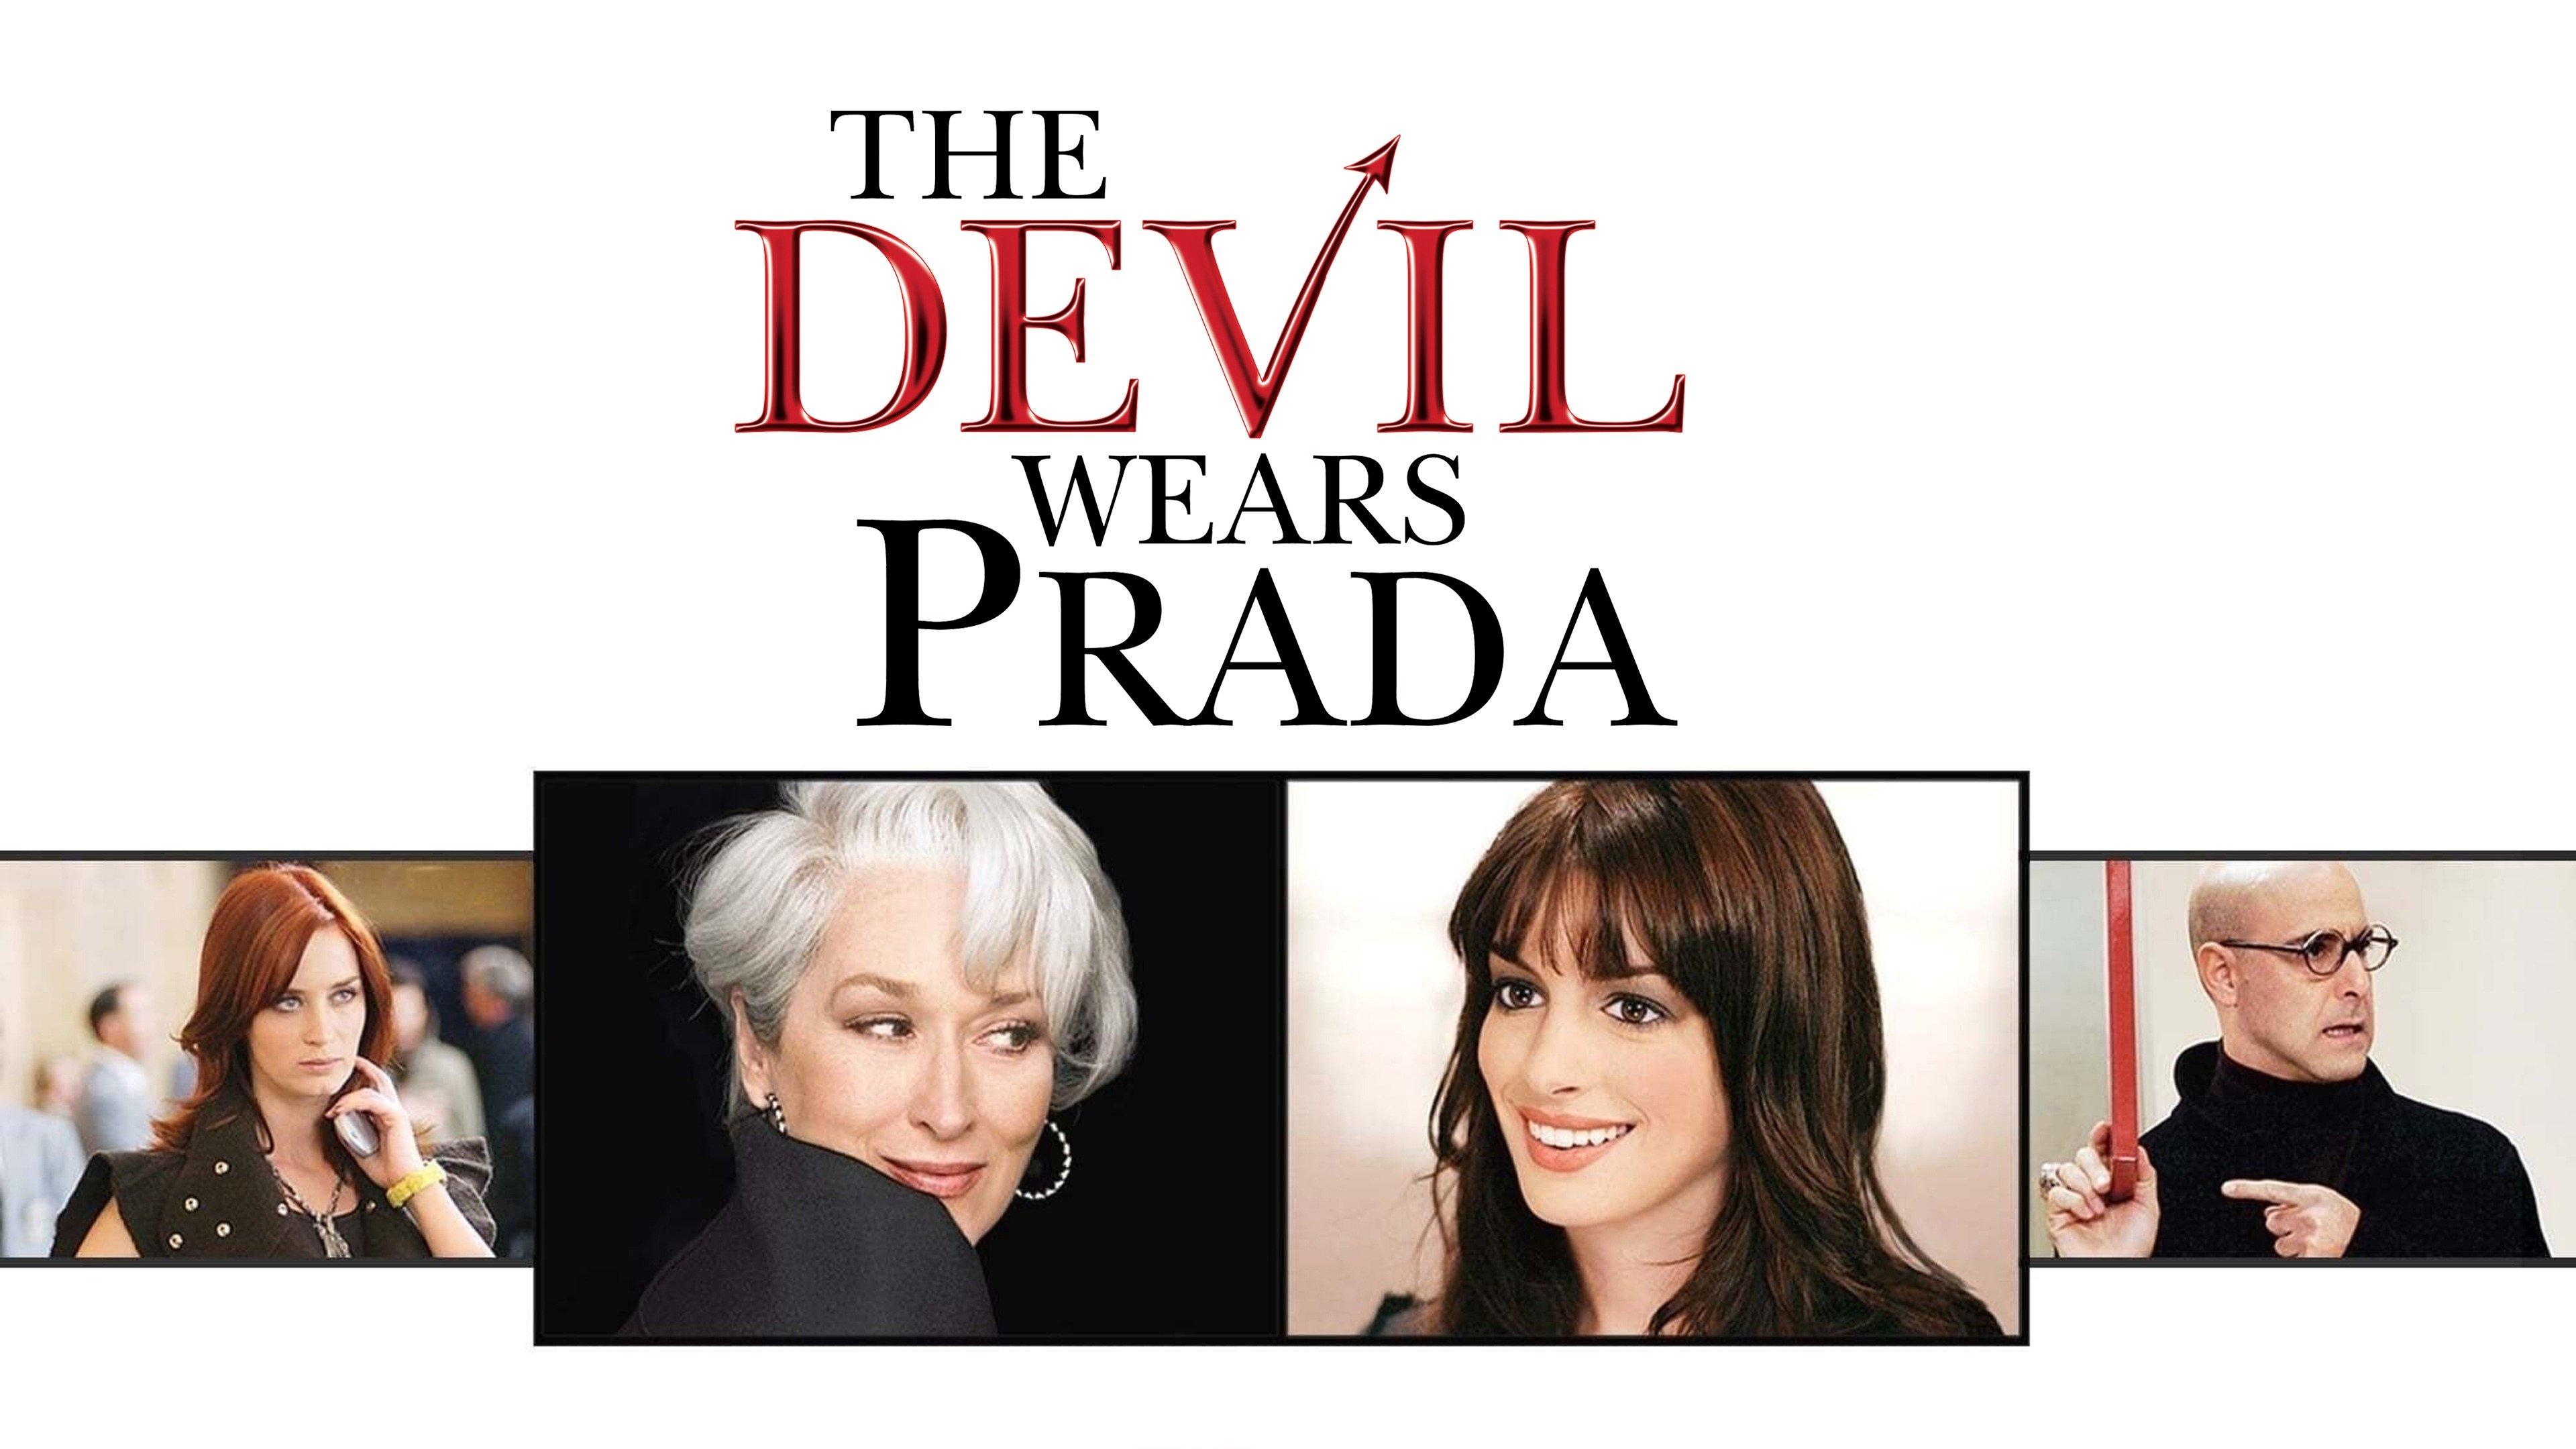 Watch The Devil Wears Prada Streaming Online on Philo (Free Trial)